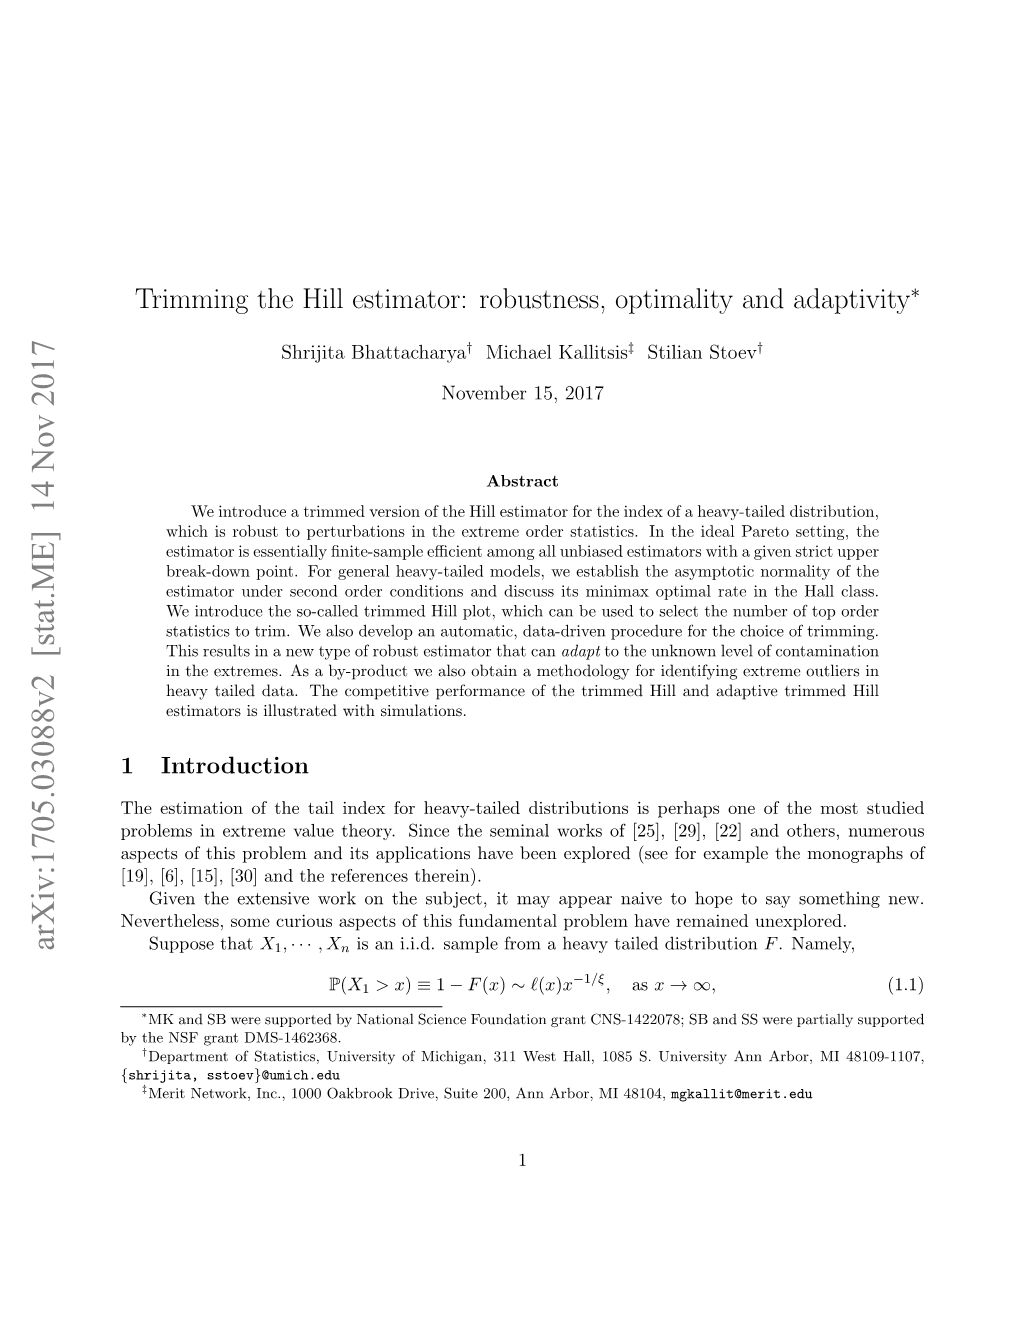 Trimming the Hill Estimator: Robustness, Optimality and Adaptivity∗